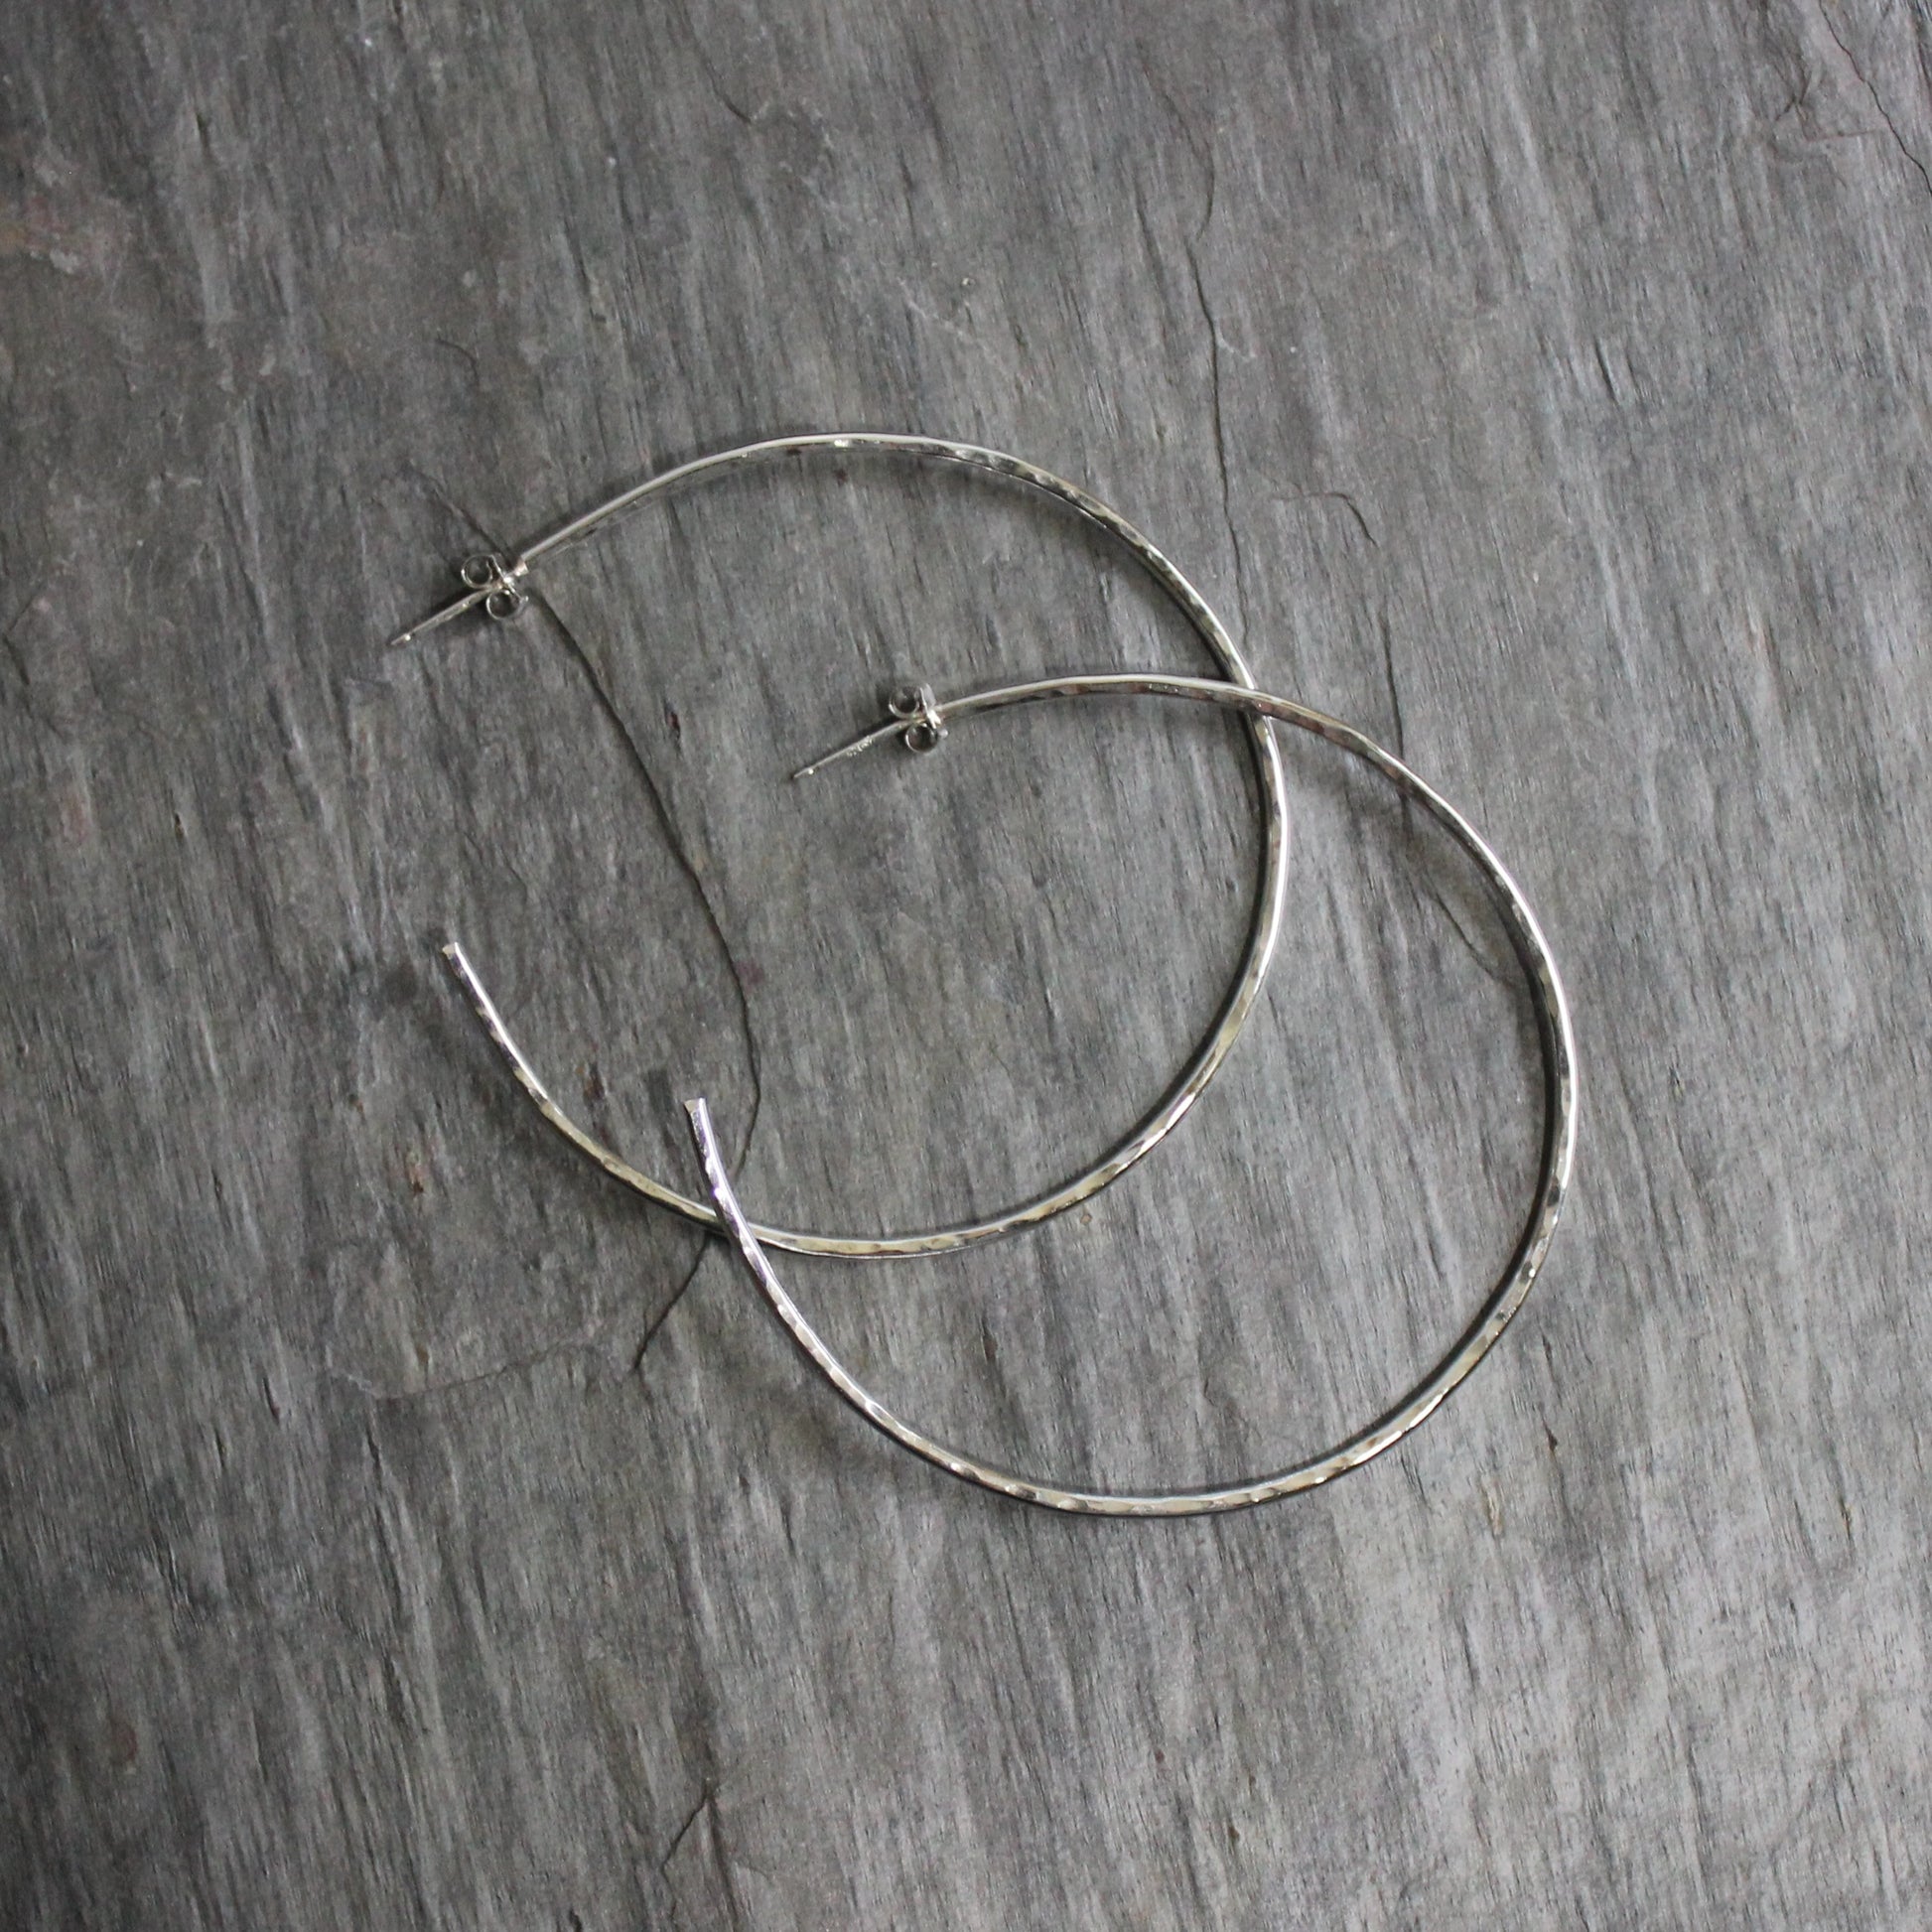 Large Handmade Sterling Silver Hammered Hoop Earrings that measure 2 inches in diameter and finished with sterling silver posts and earring nuts. 